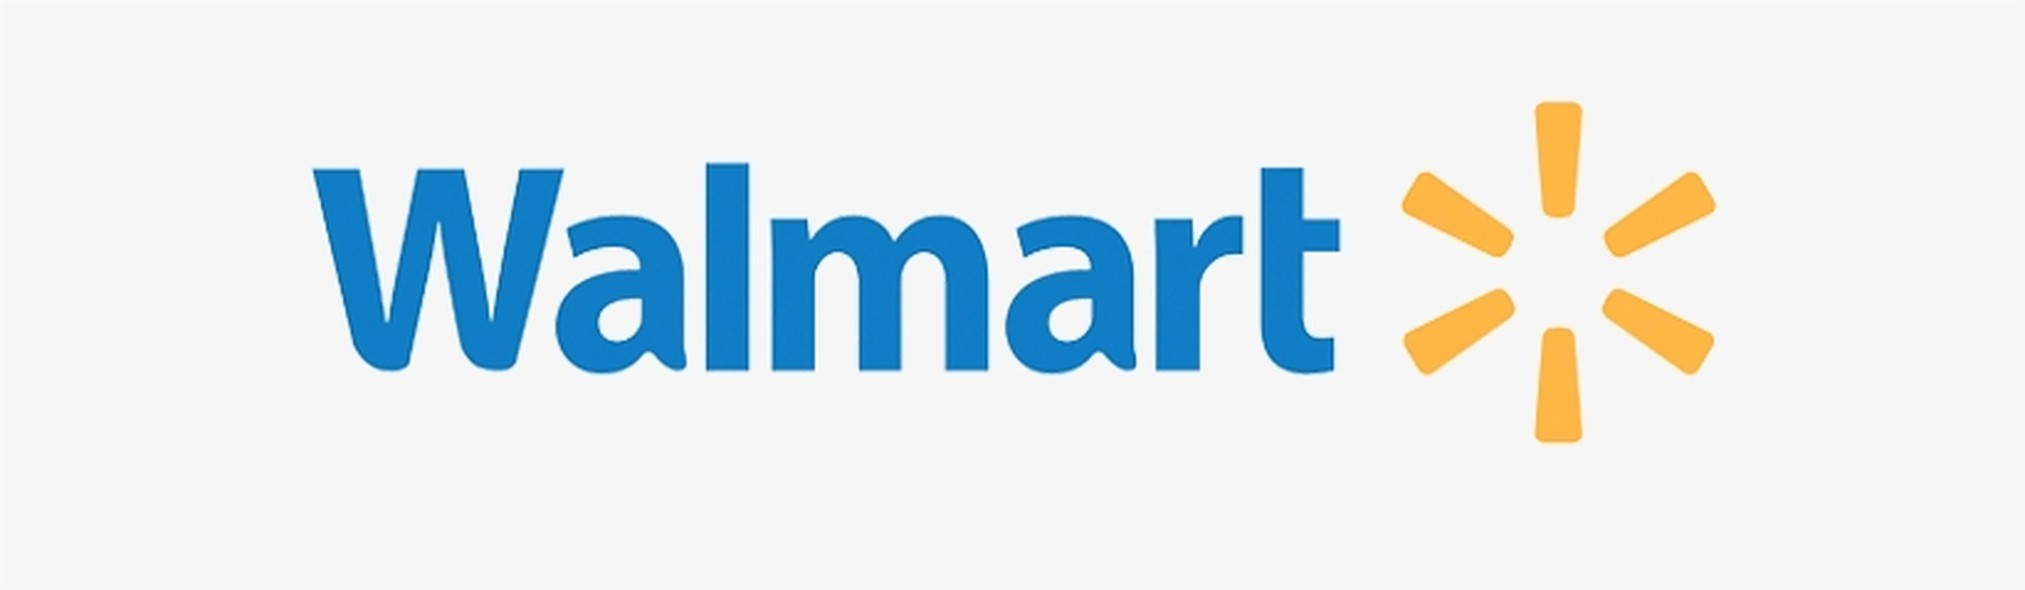 Logo Walmart Semplicistico Sfondo